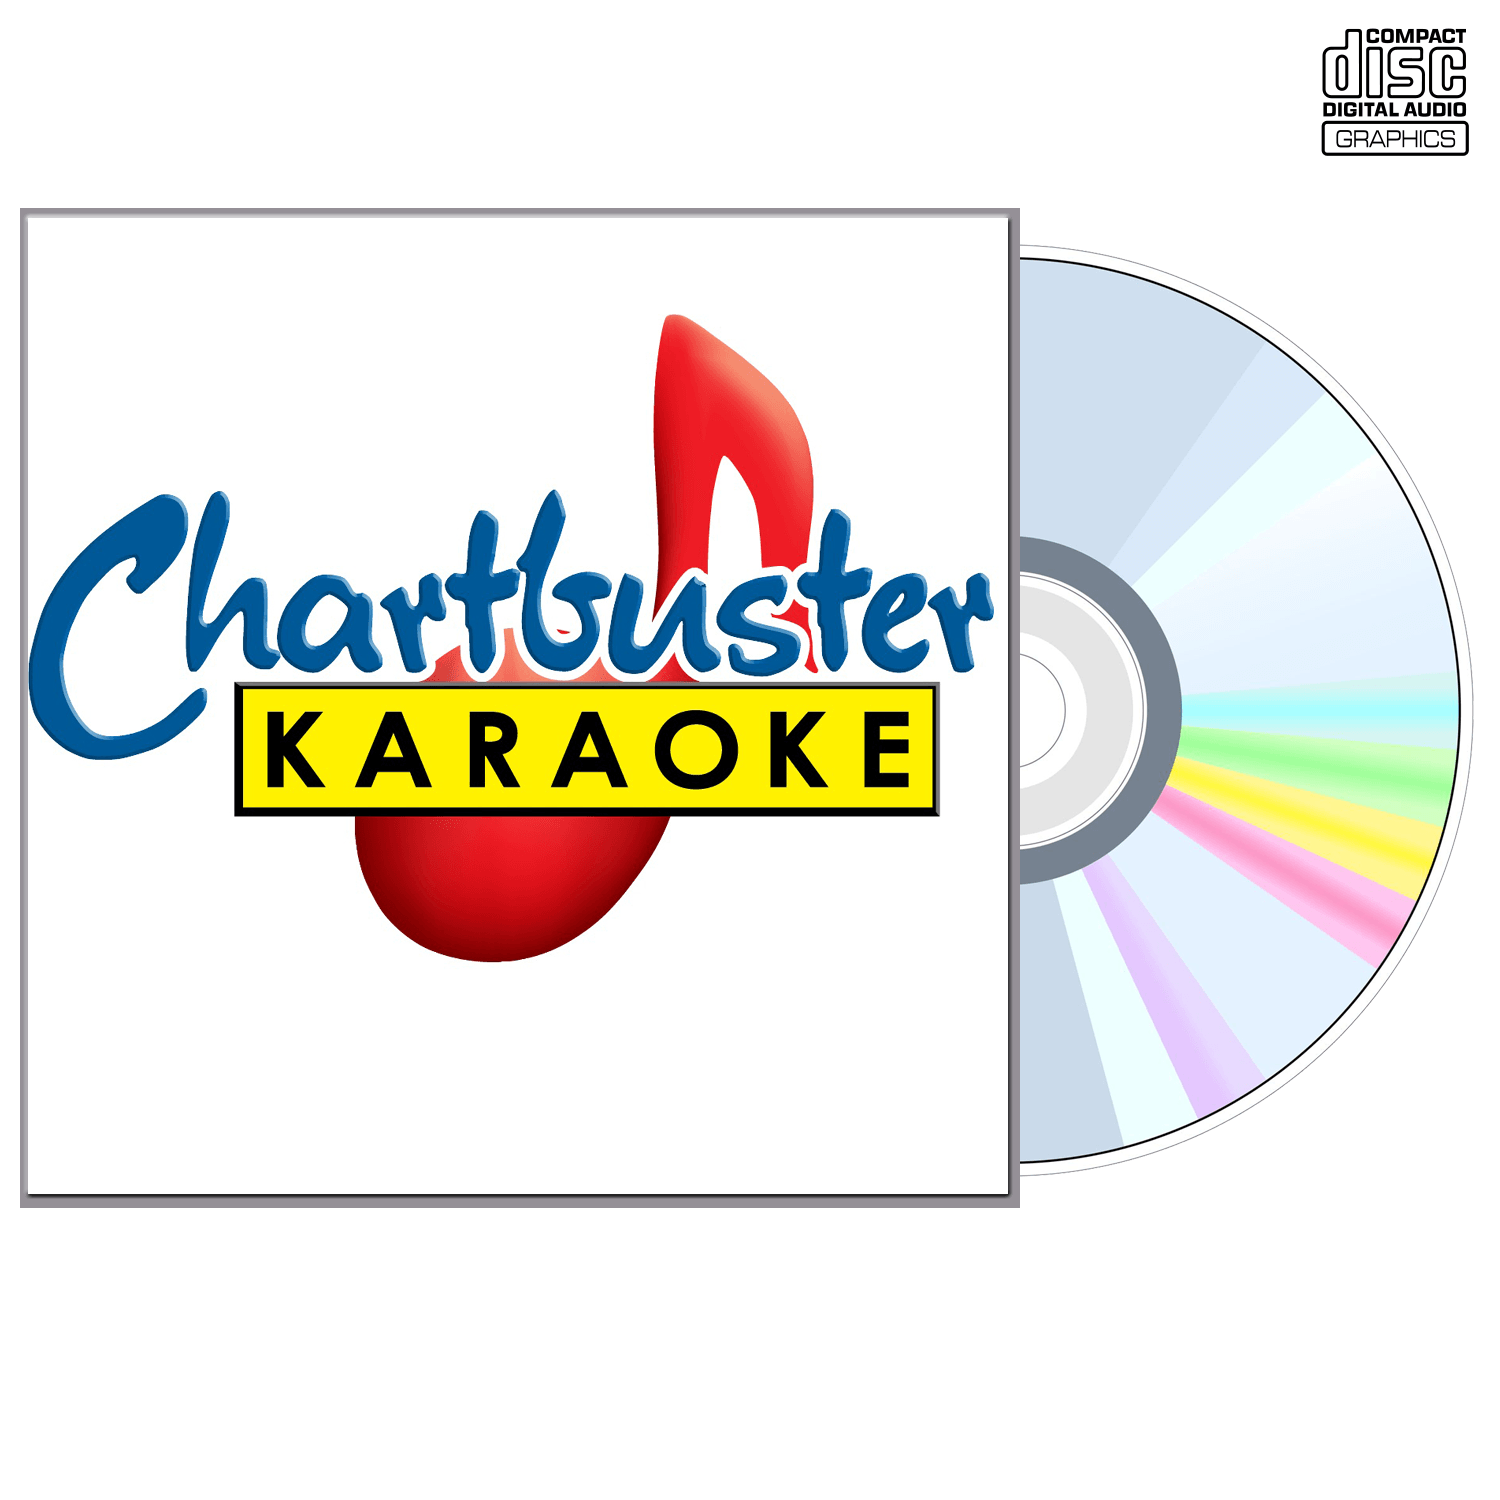 Shania Twain Vol 3 - CD+G - Chartbuster Karaoke - Karaoke Home Entertainment